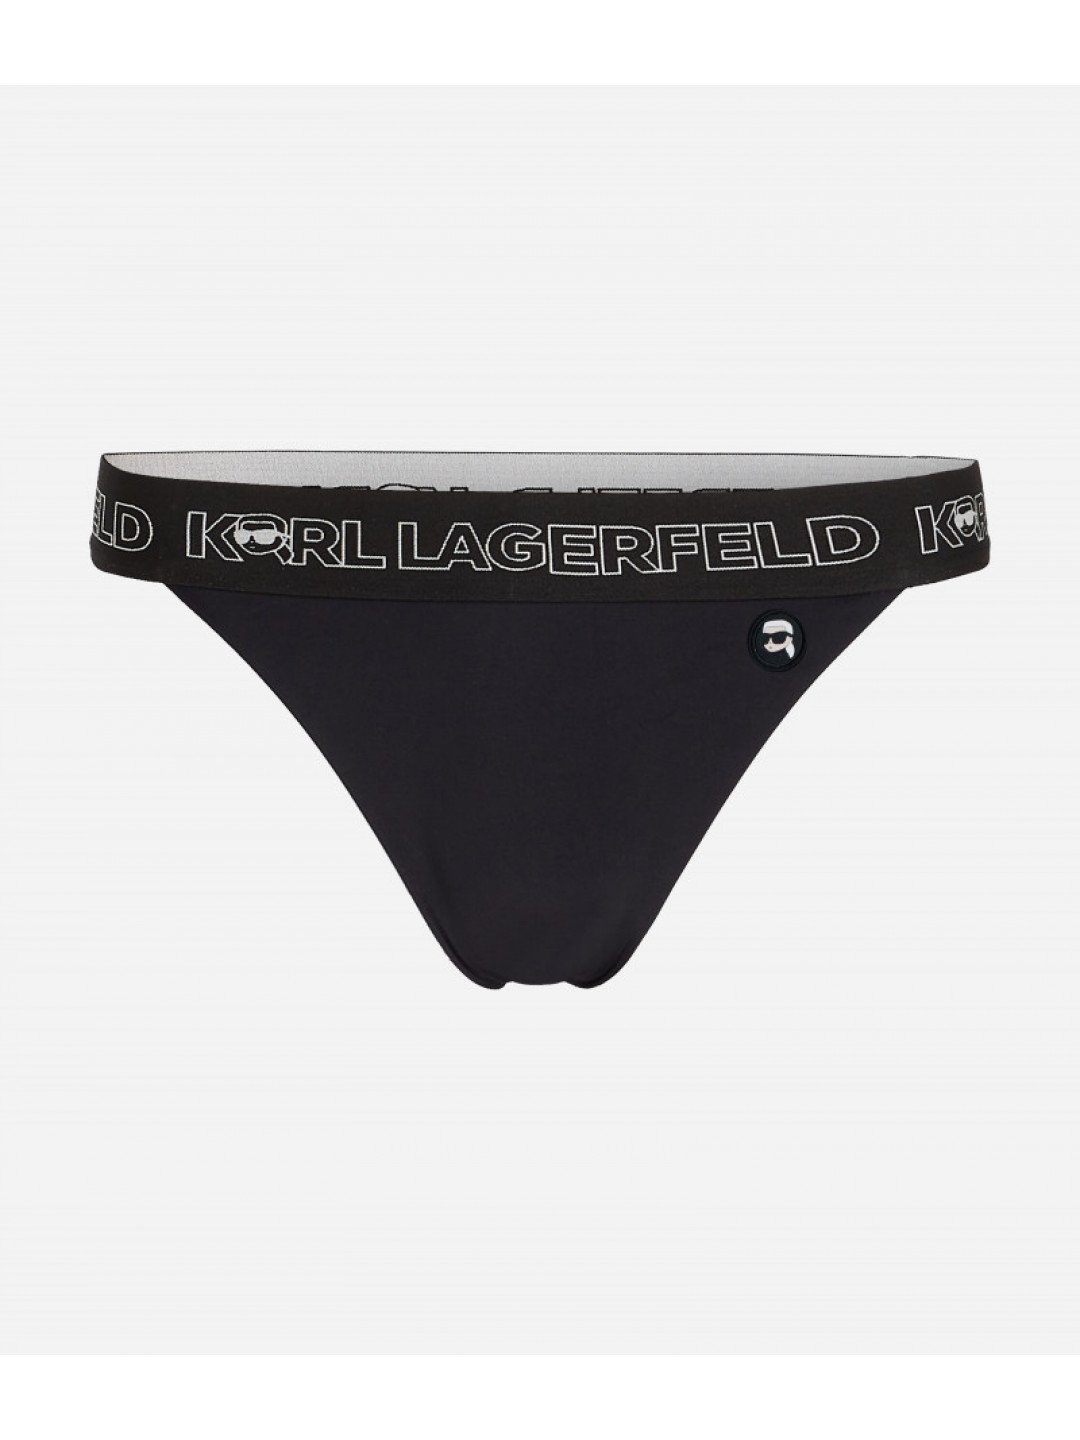 Plavky karl lagerfeld ikonik 2 0 bottoms w elastic černá xl